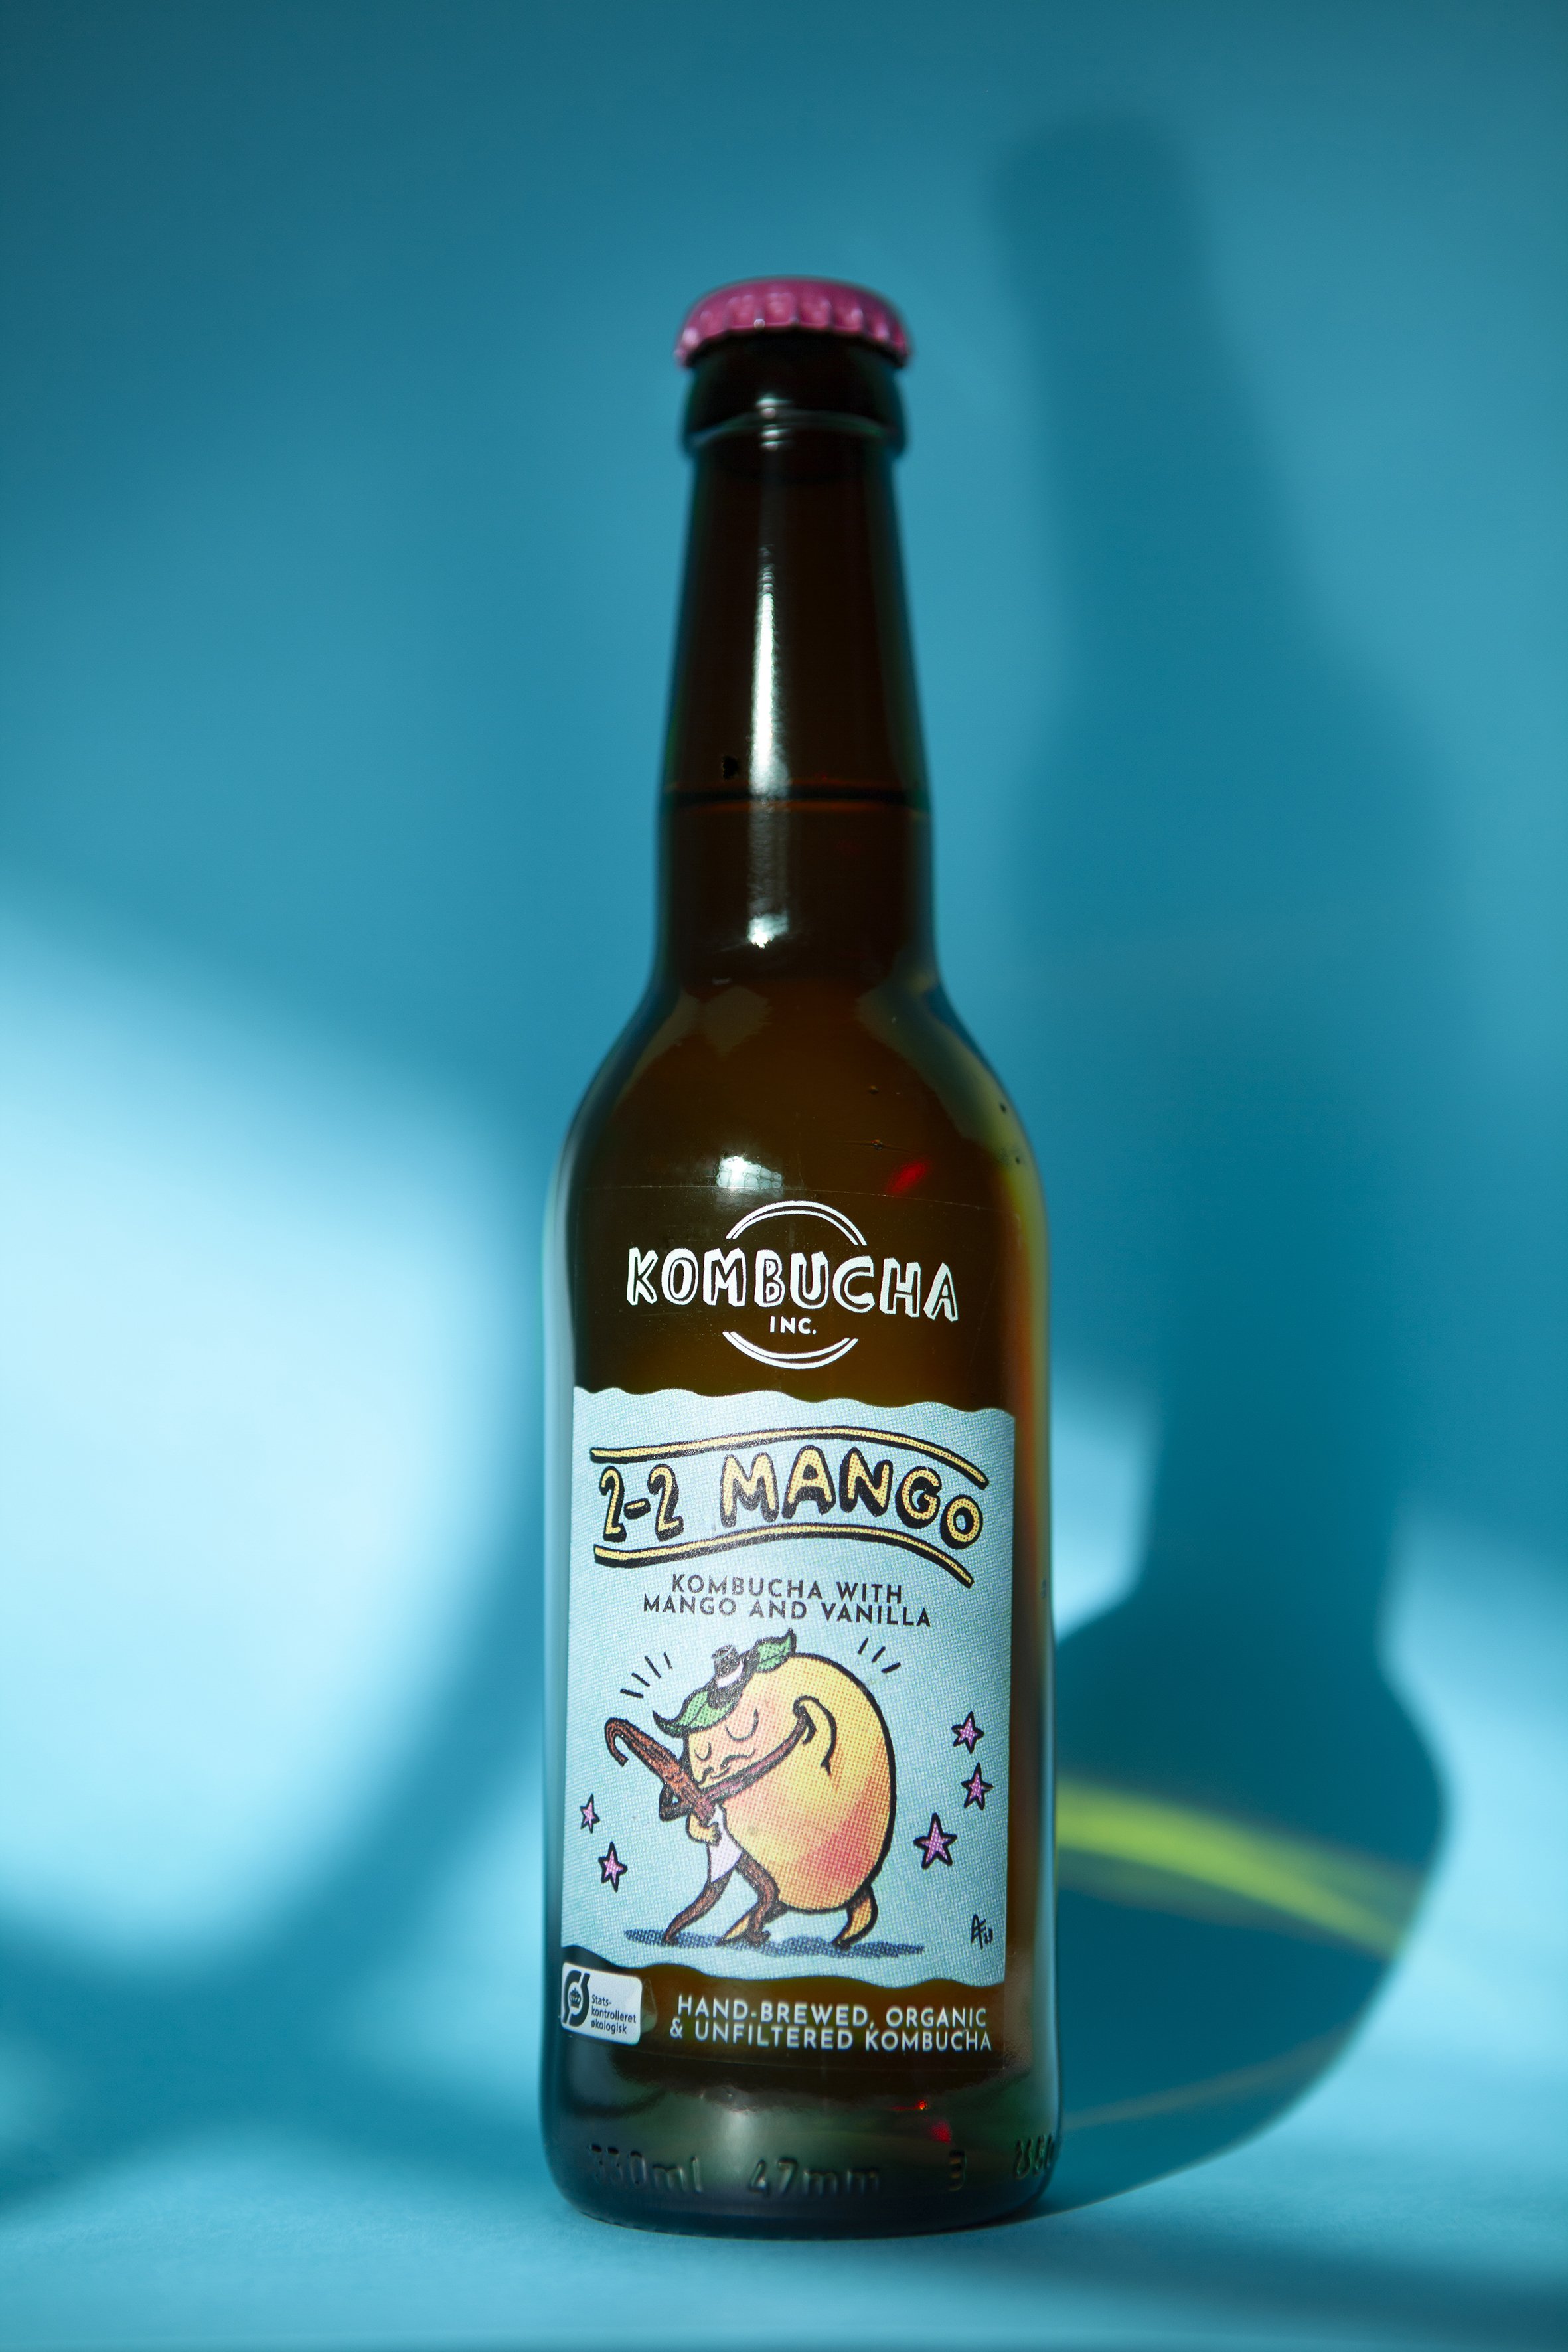 2-2-Mango-Kombucha-Inc.Bottle-craft-beer-sund.jpg